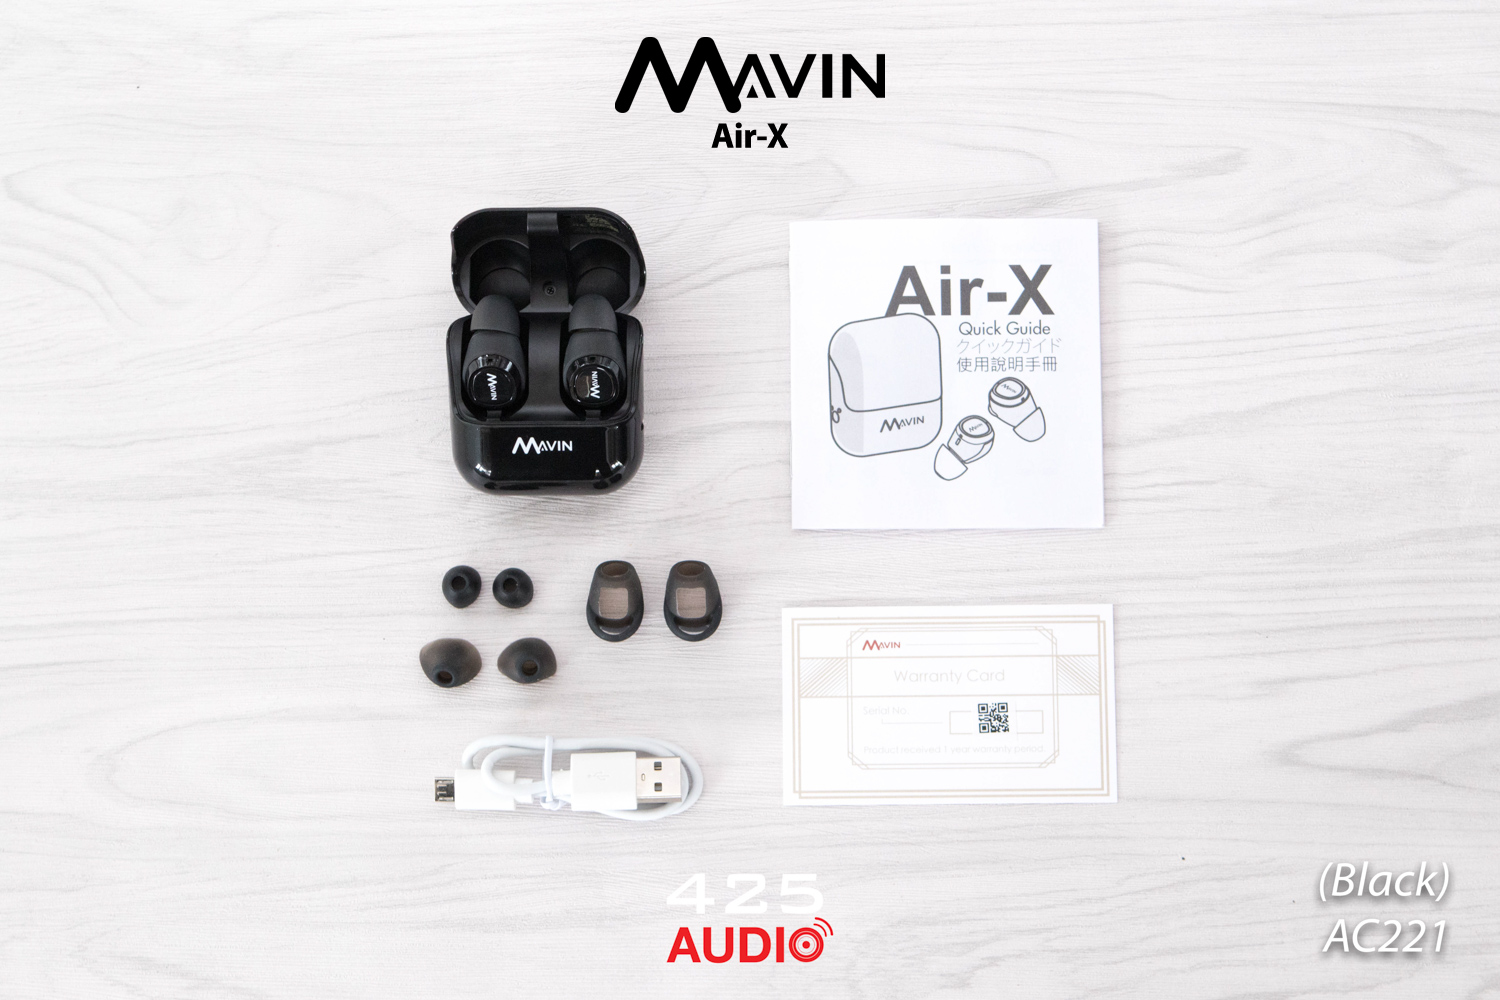 marvin,air-x,in,ear,true,wireless,long,battery,life,aptx,support,ipx5,qualcomm,30,meters,range